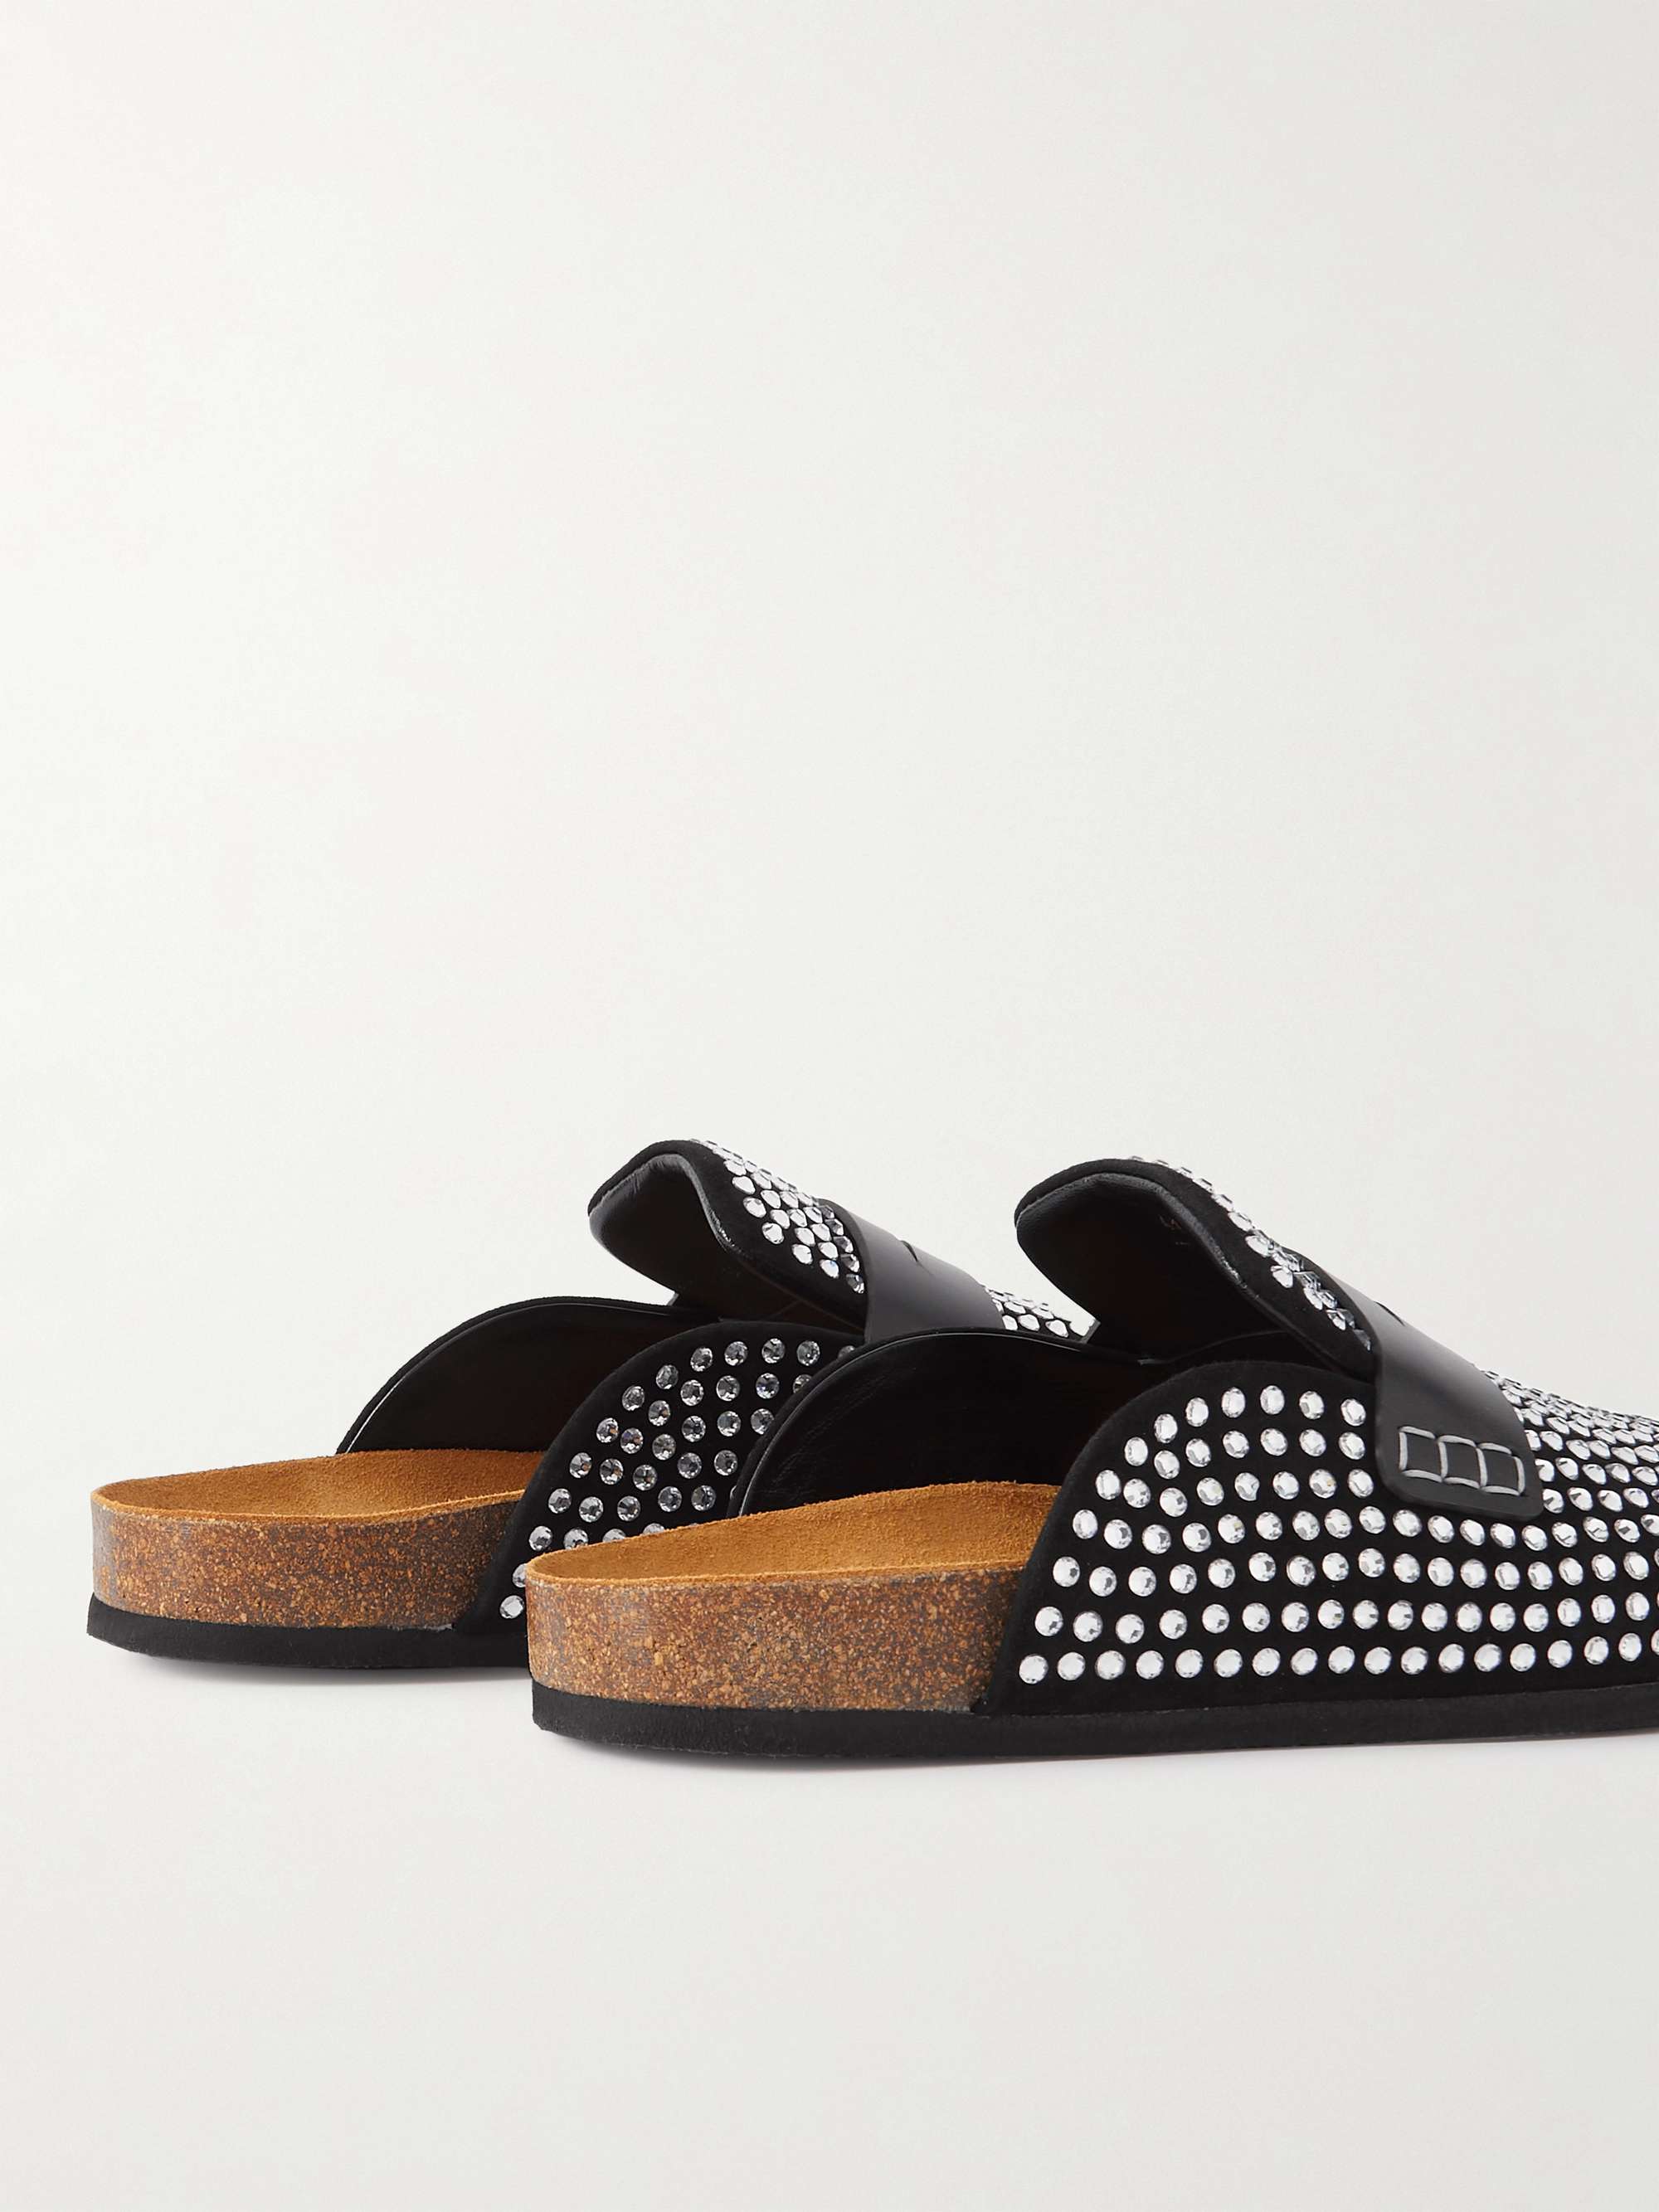 JW ANDERSON Leather-Trimmed Crystal-Embellished Suede Slippers